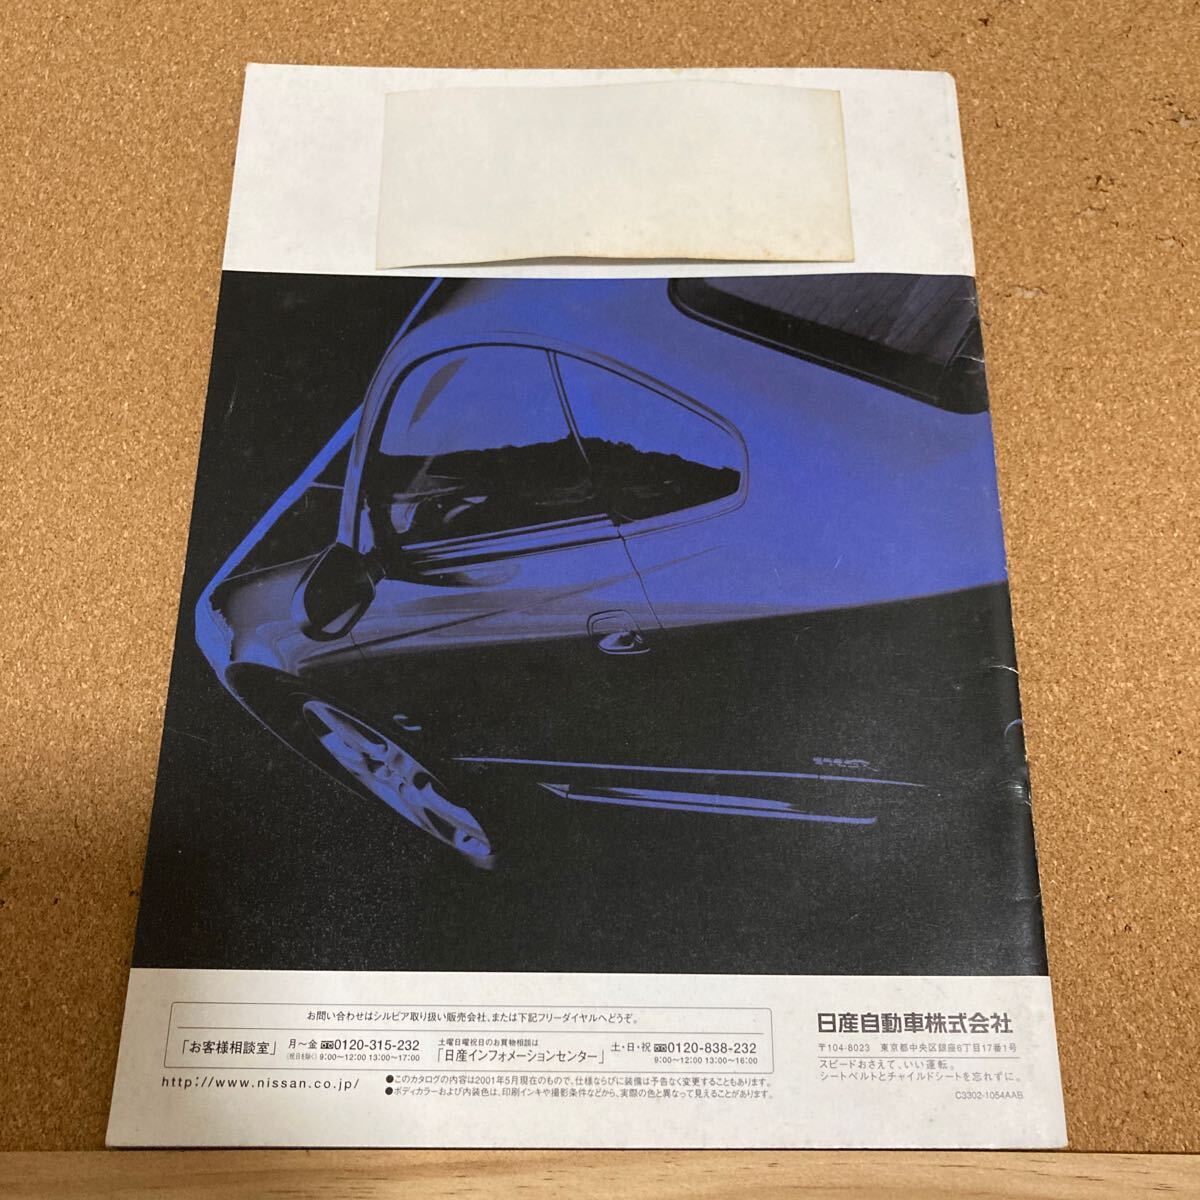 S15 Silvia каталог 2001.5 "Отэк" VERSION 